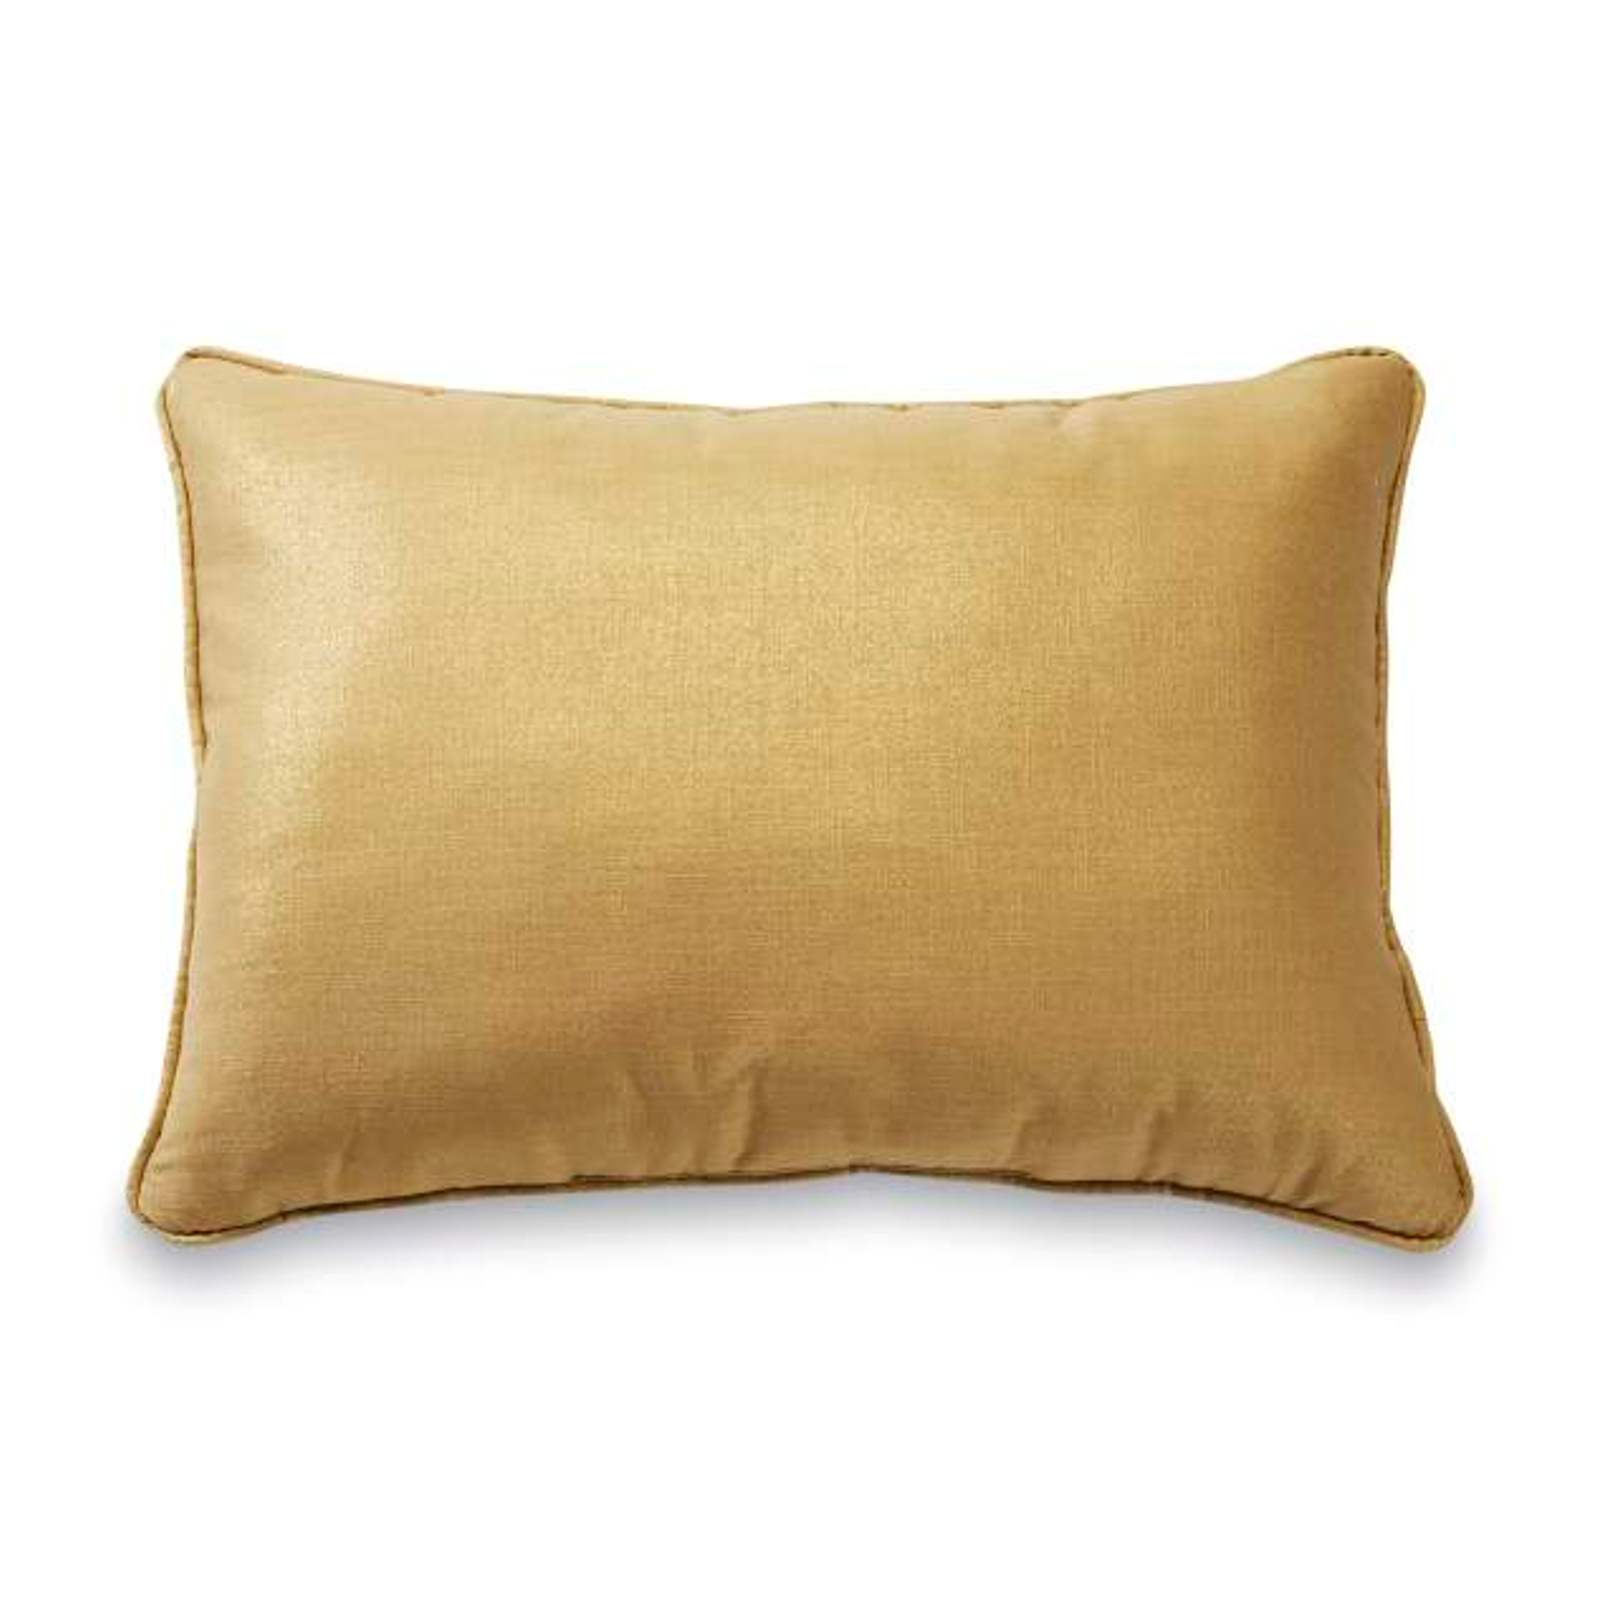 Cannon Holiday Decorative Pillow - Metallic